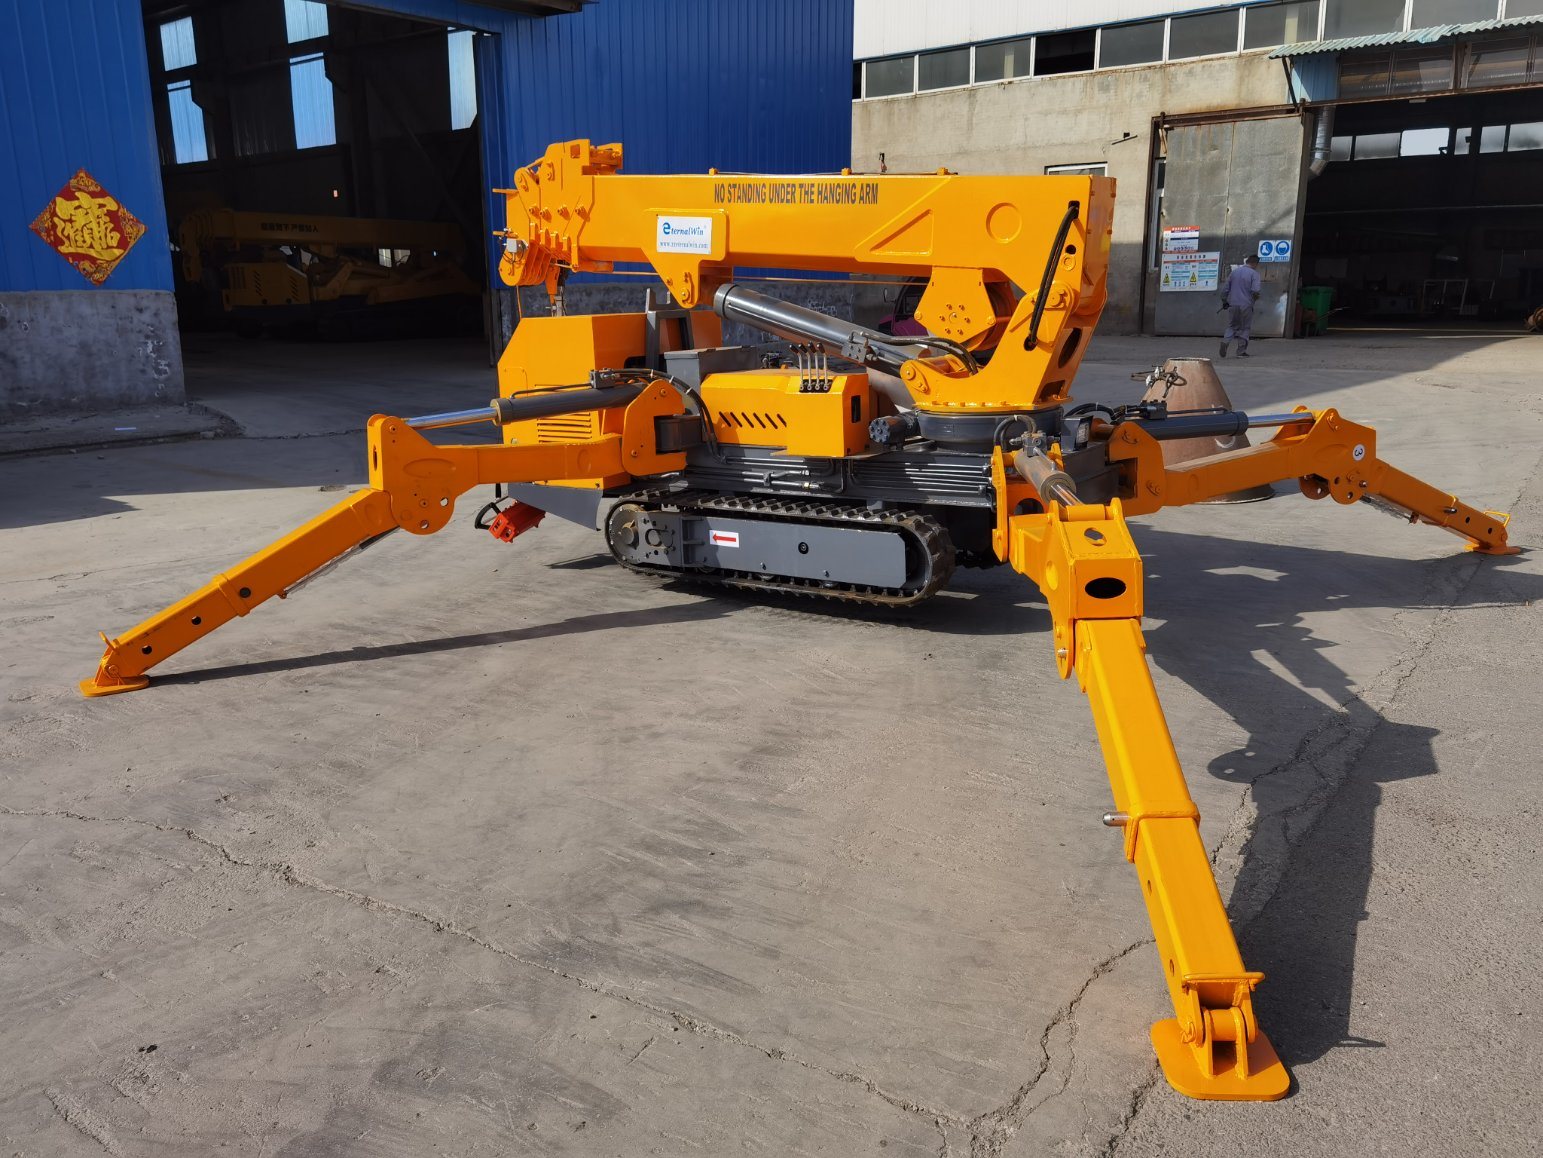 Rough Terrain Crane 5 Tons Easy Operate Lifting Equipment Crawler Crane with Hydraulic Motor